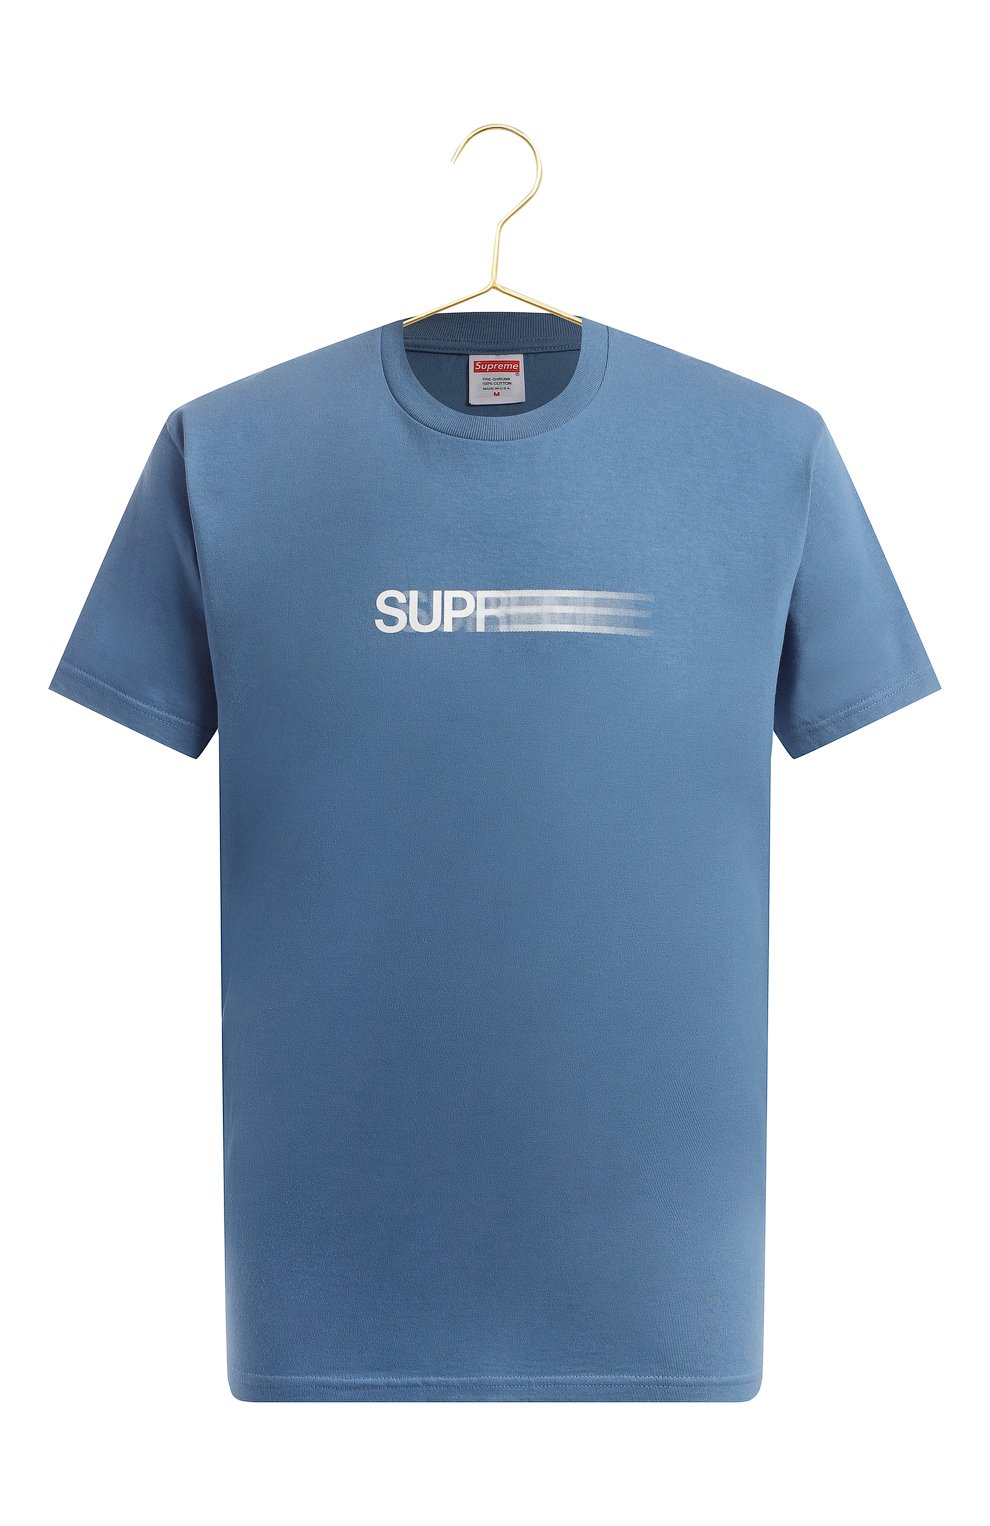 Хлопковая футболка | Supreme | Синий - 1